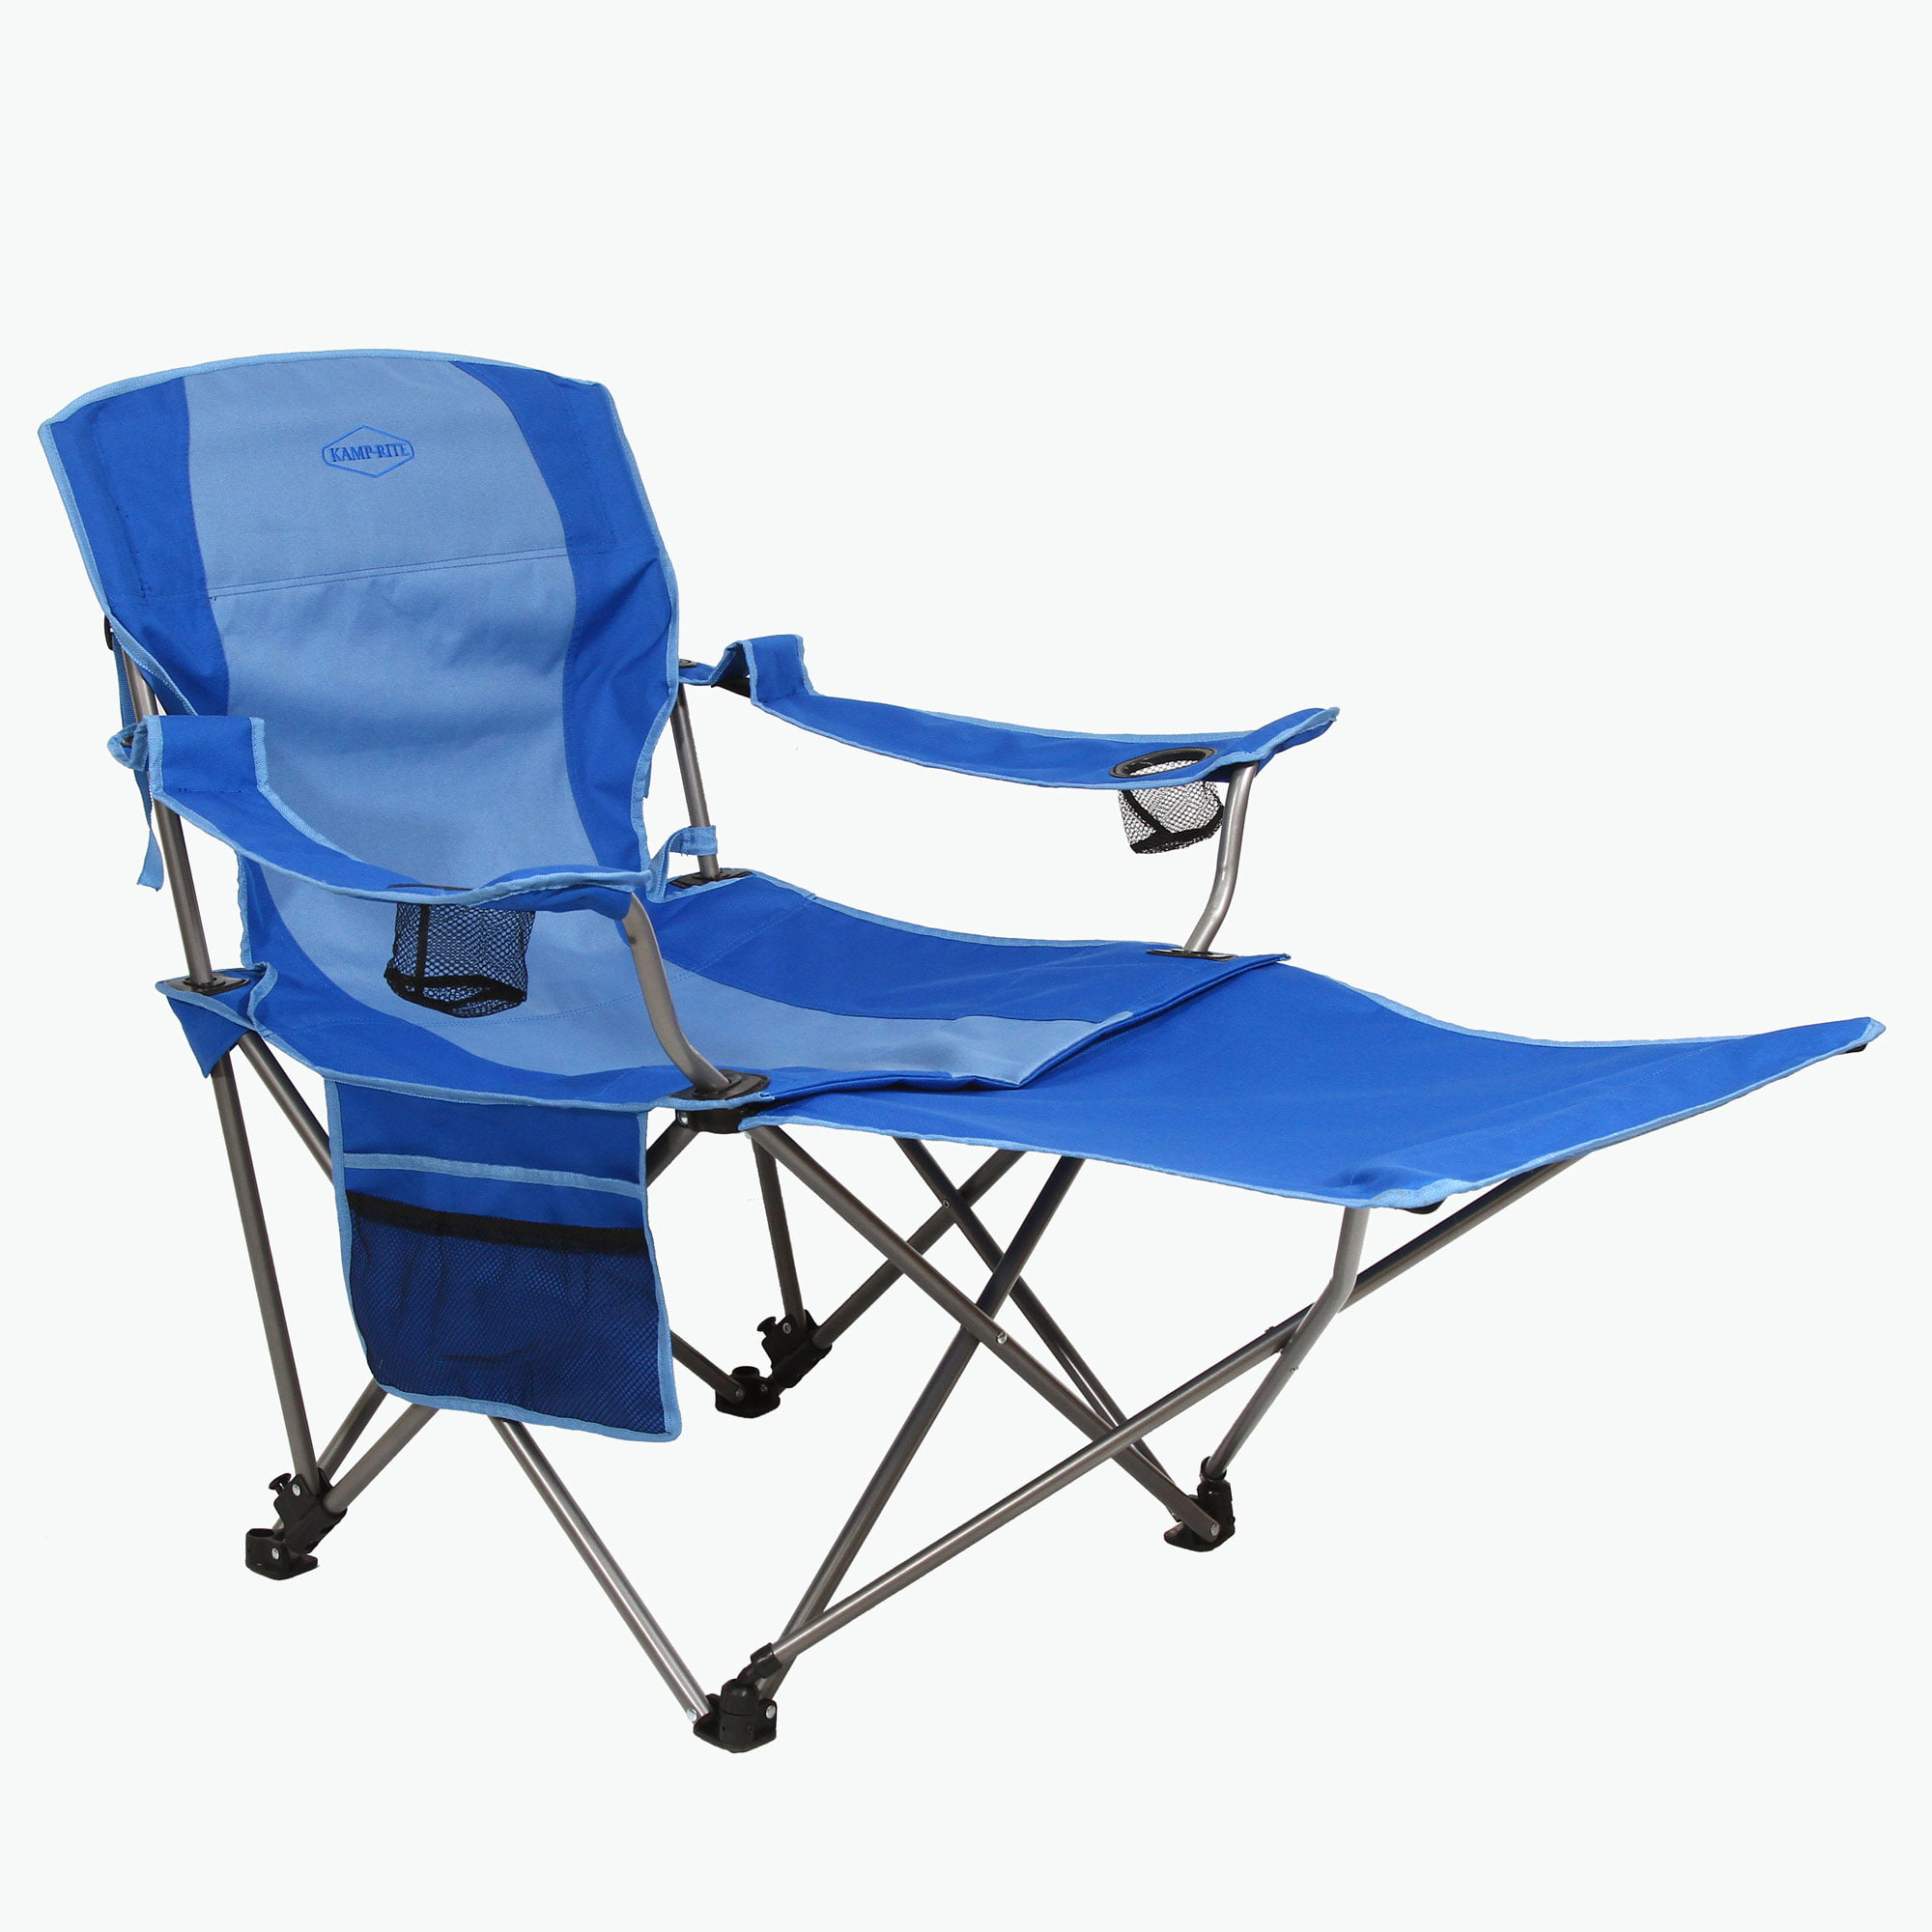 ARROWHEAD OUTDOOR Oversized Heavy-Duty Club Folding Camping Chair 